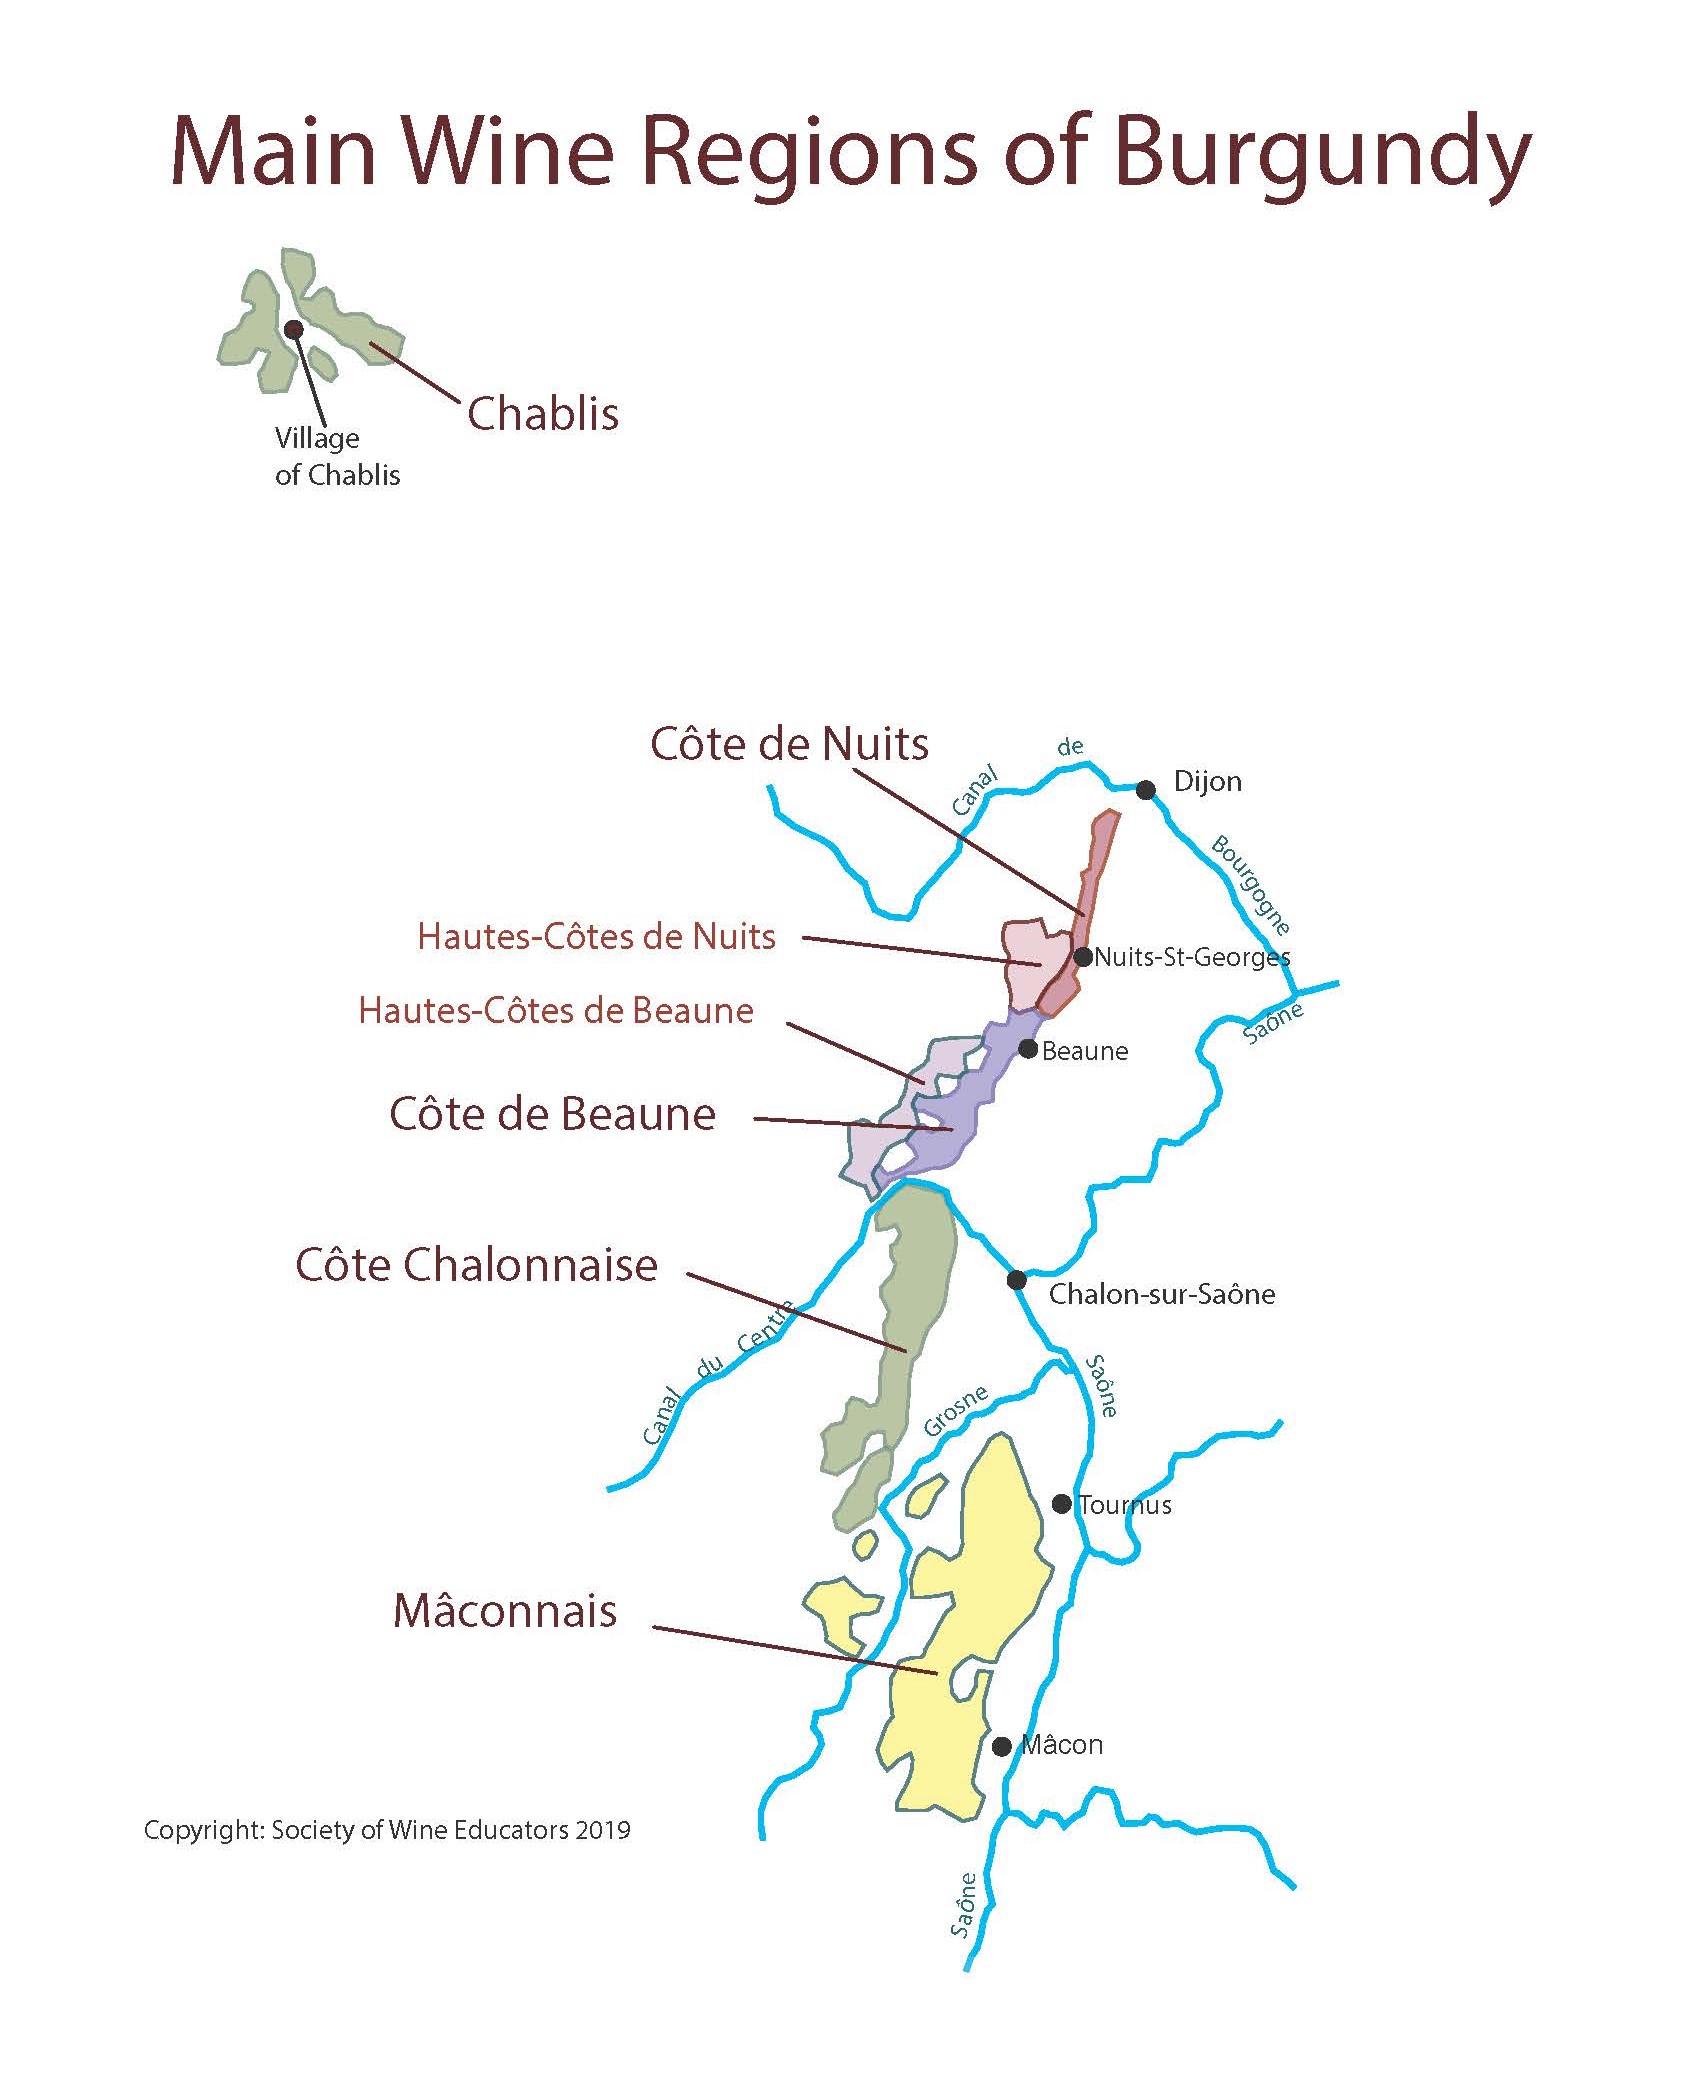 whistle Isaac Sea slug burgundy wine region map magic Or factor